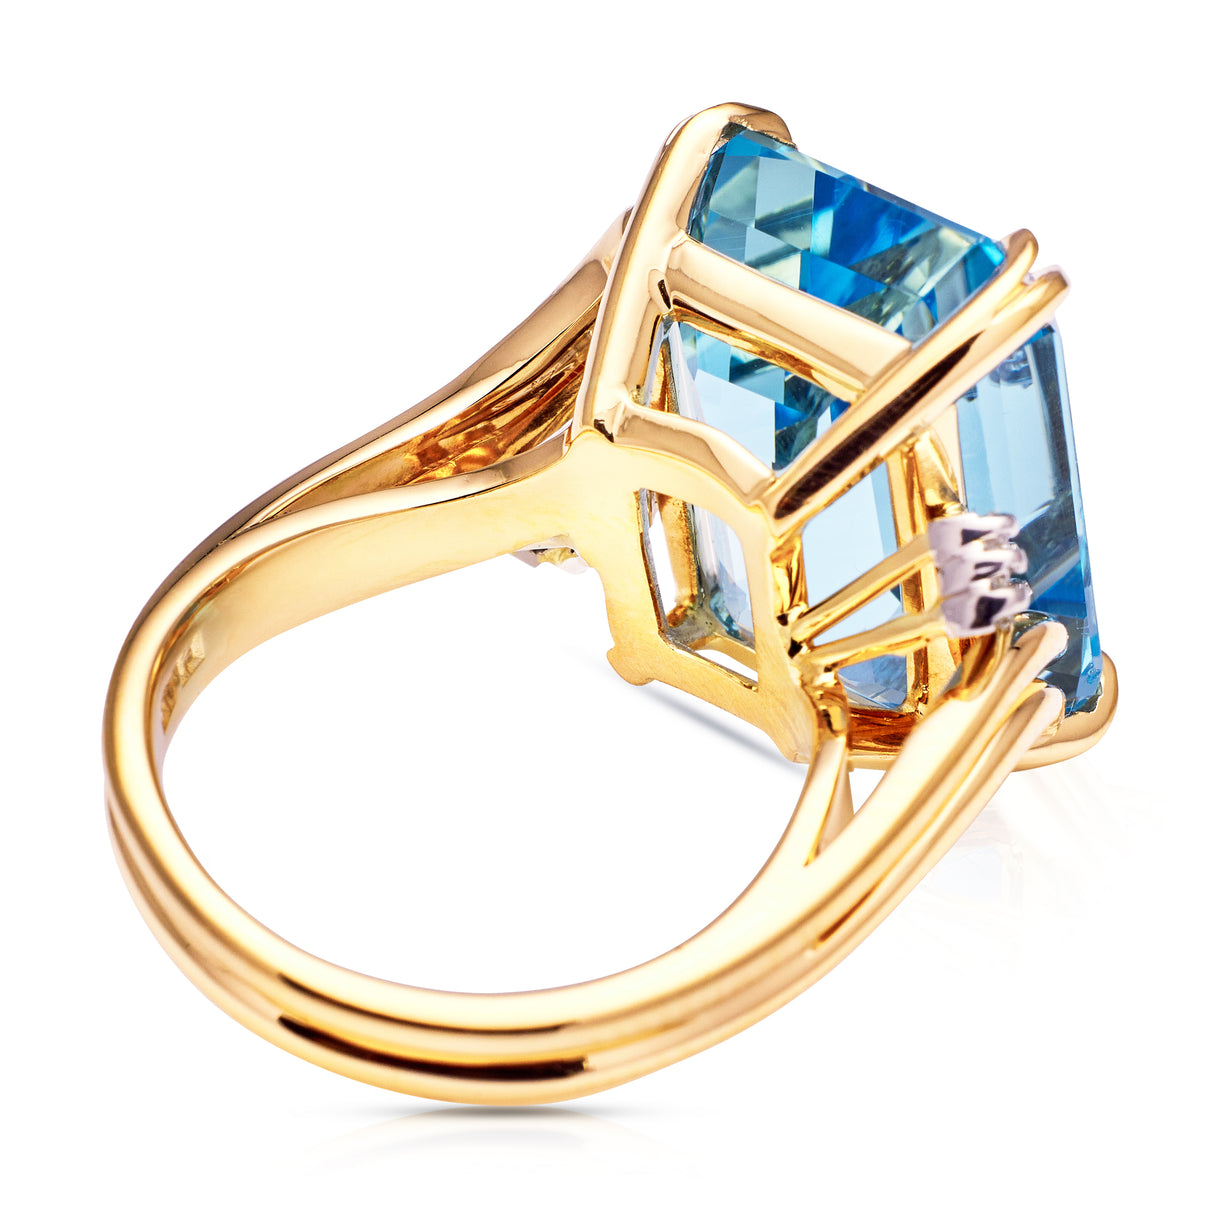 Vintage, aquamarine & diamond ring, 18ct yellow gold & platinum